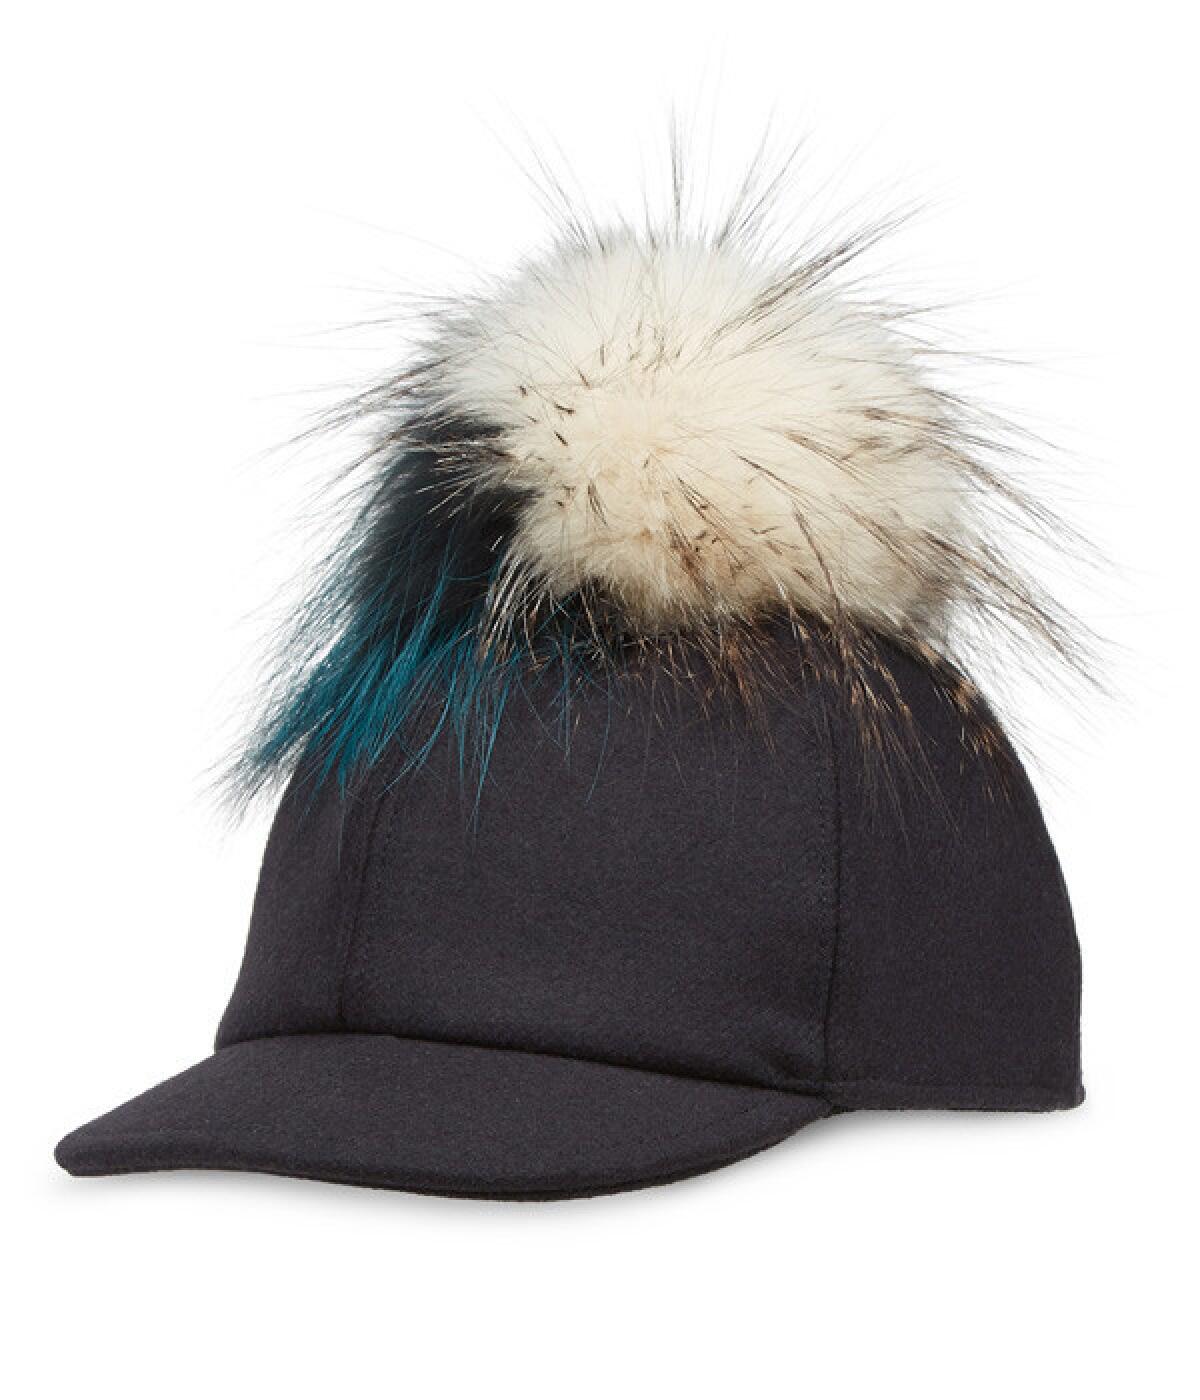 Fendi wool baseball cap with fox fur trim.